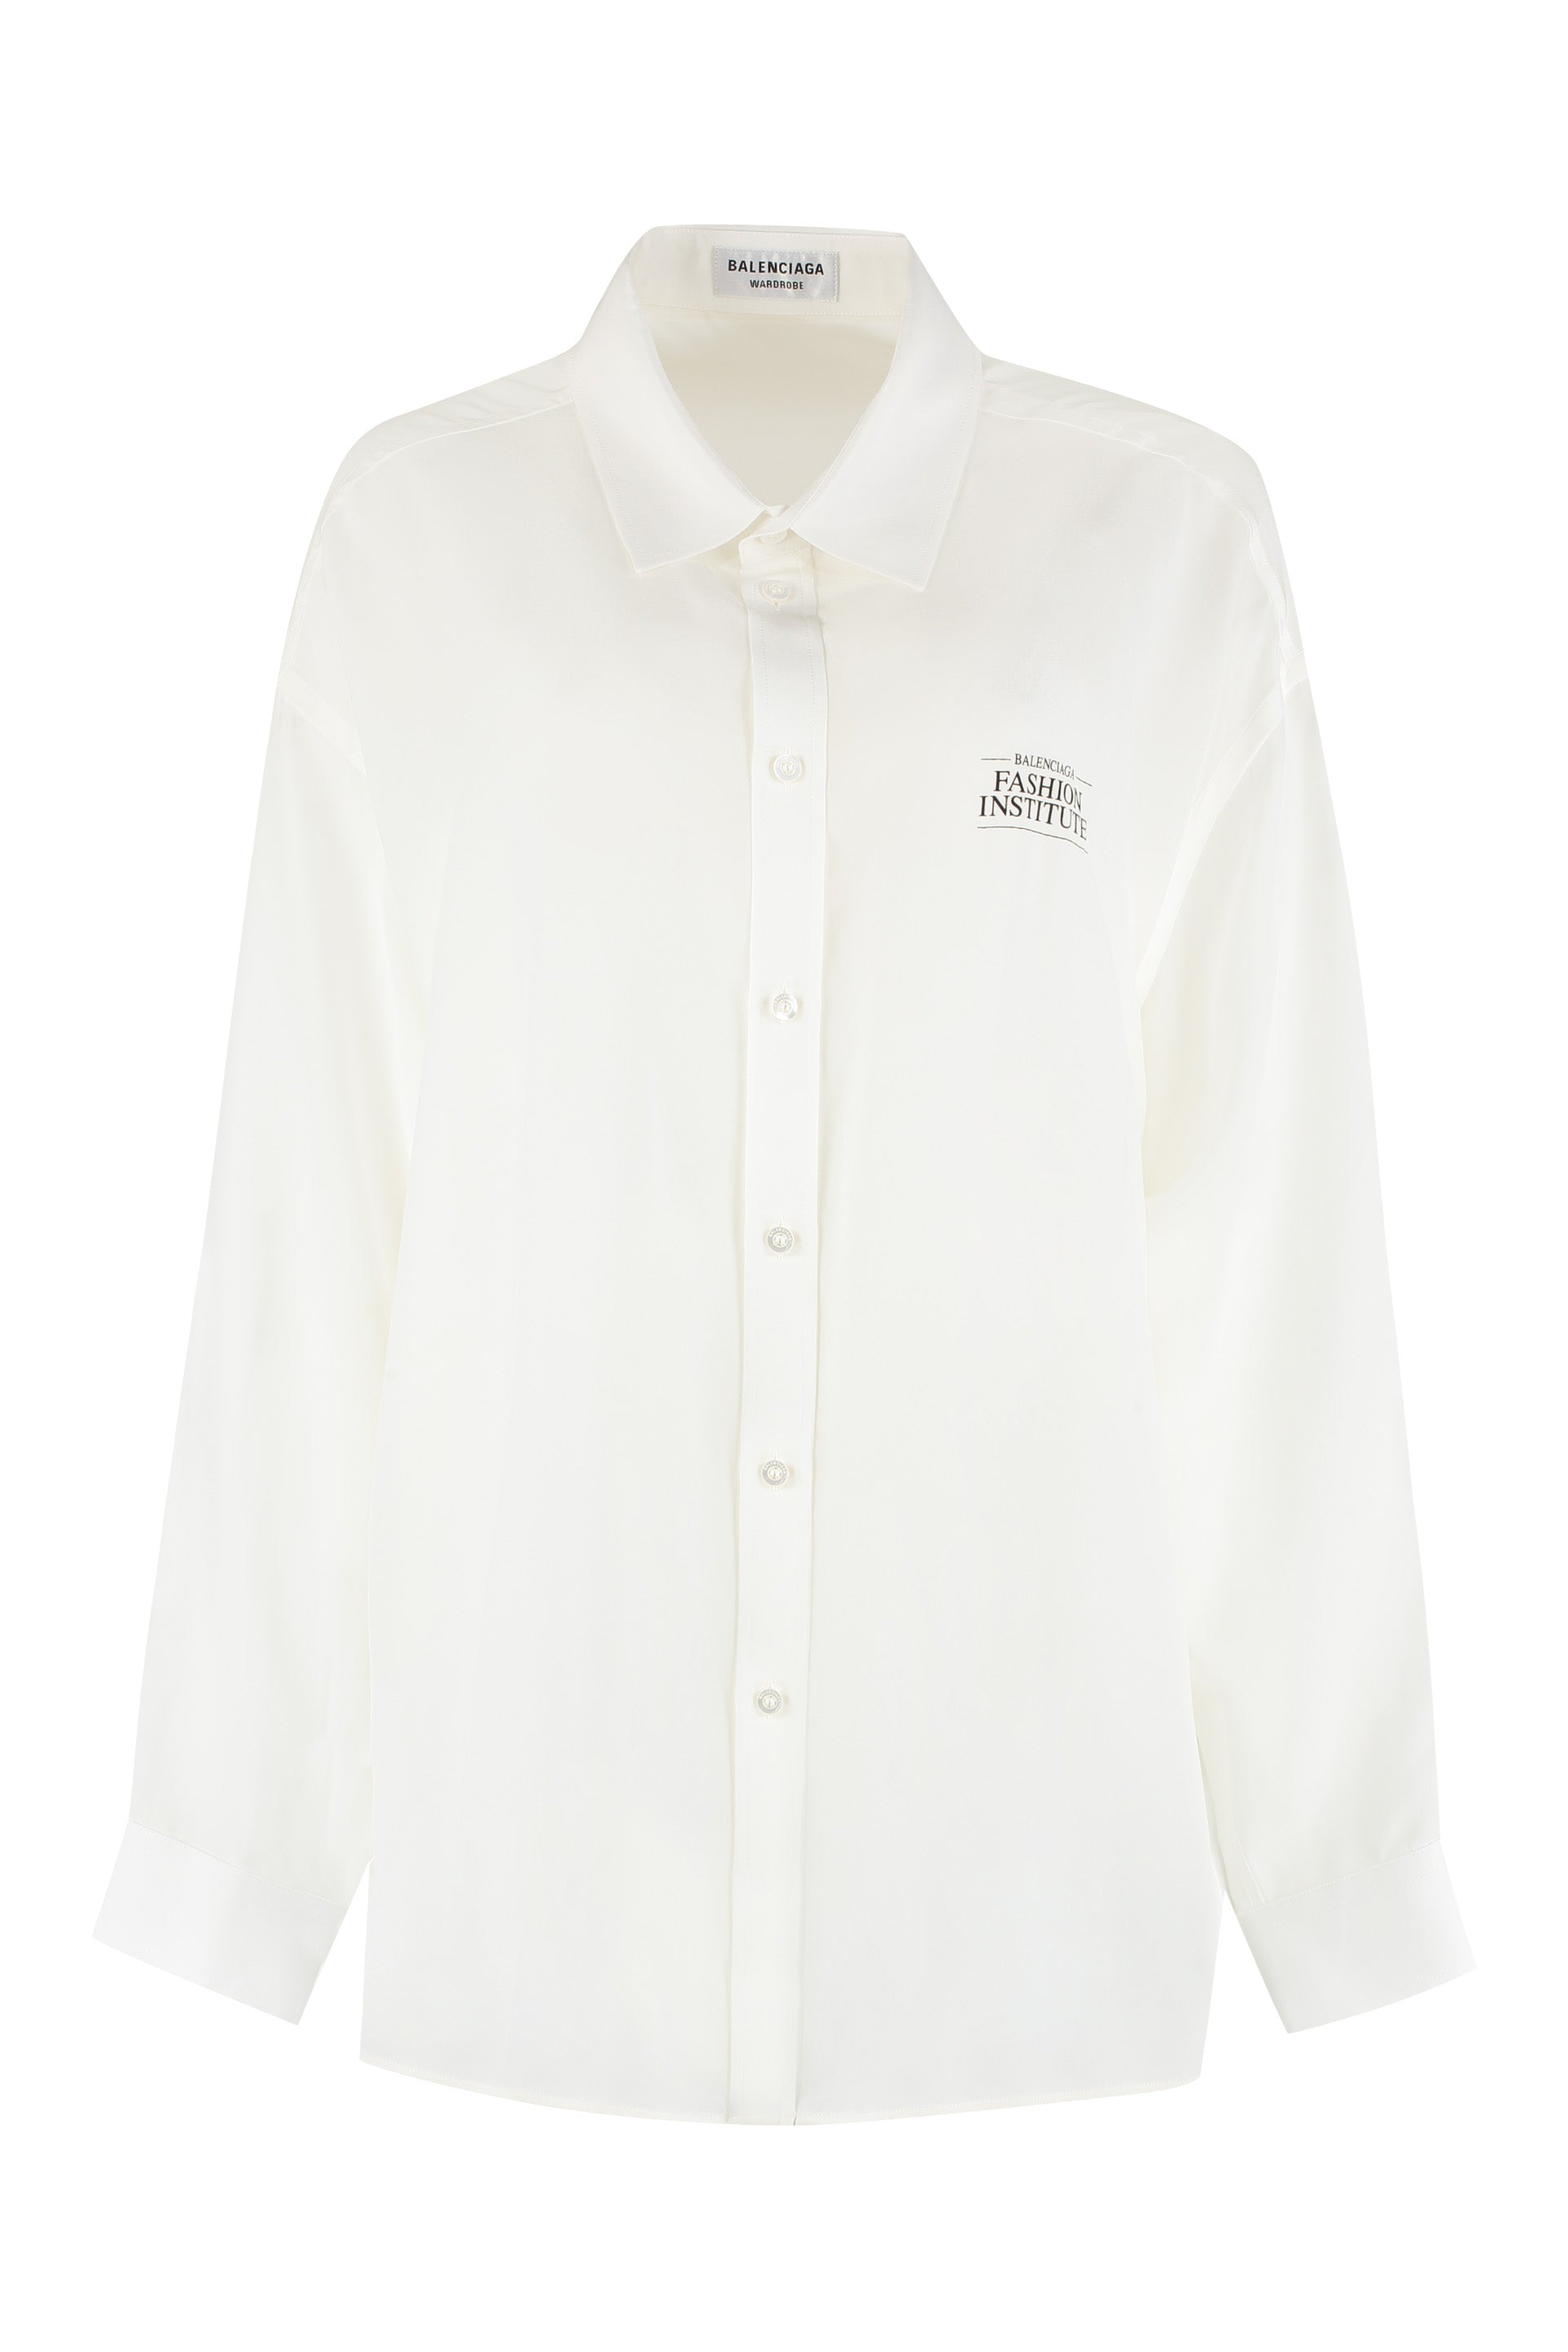 Balenciaga White Silk Shirt For Women